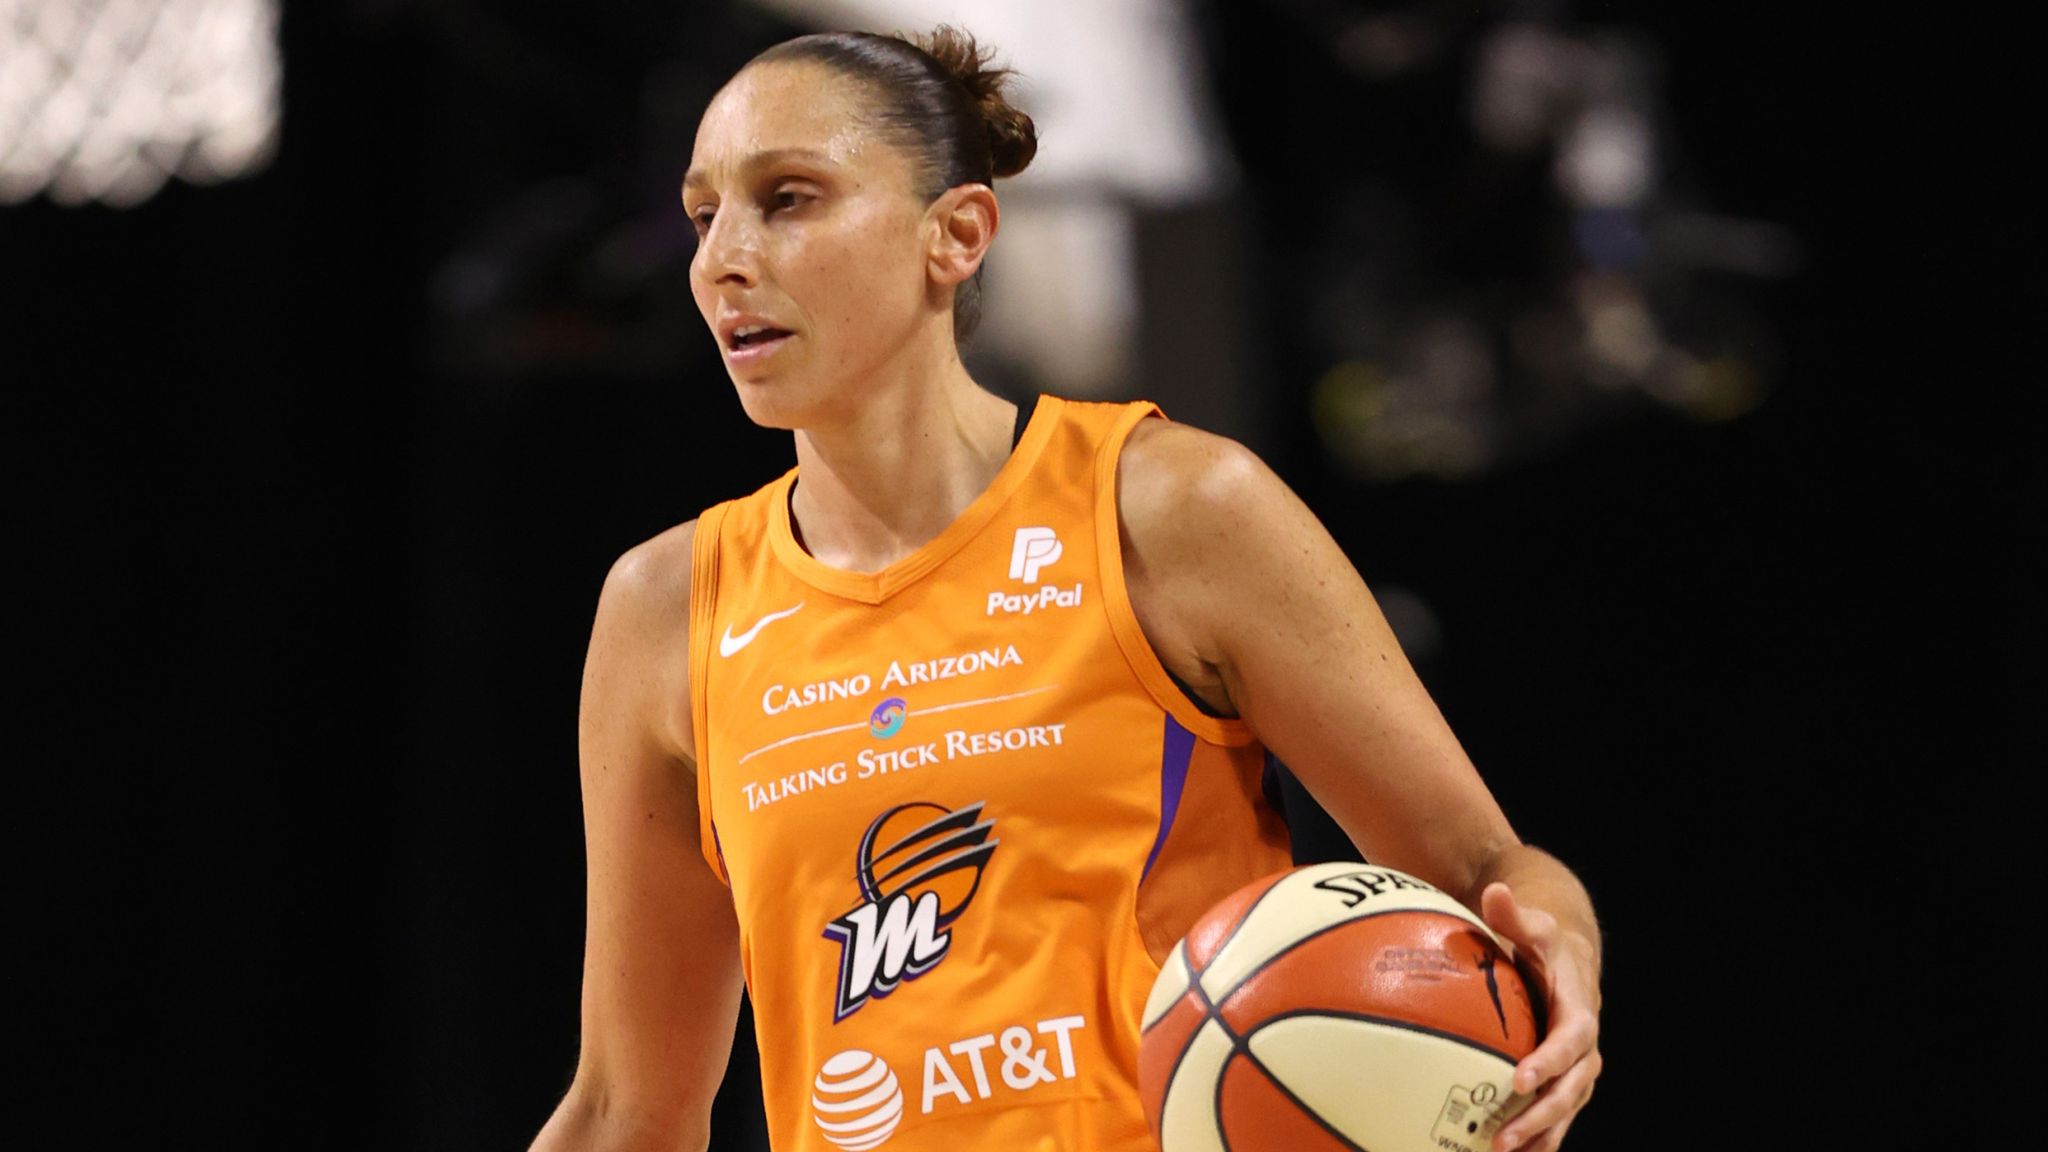 WNBA Diana Taurasi scores 22 points to lead Phoenix Mercury to win